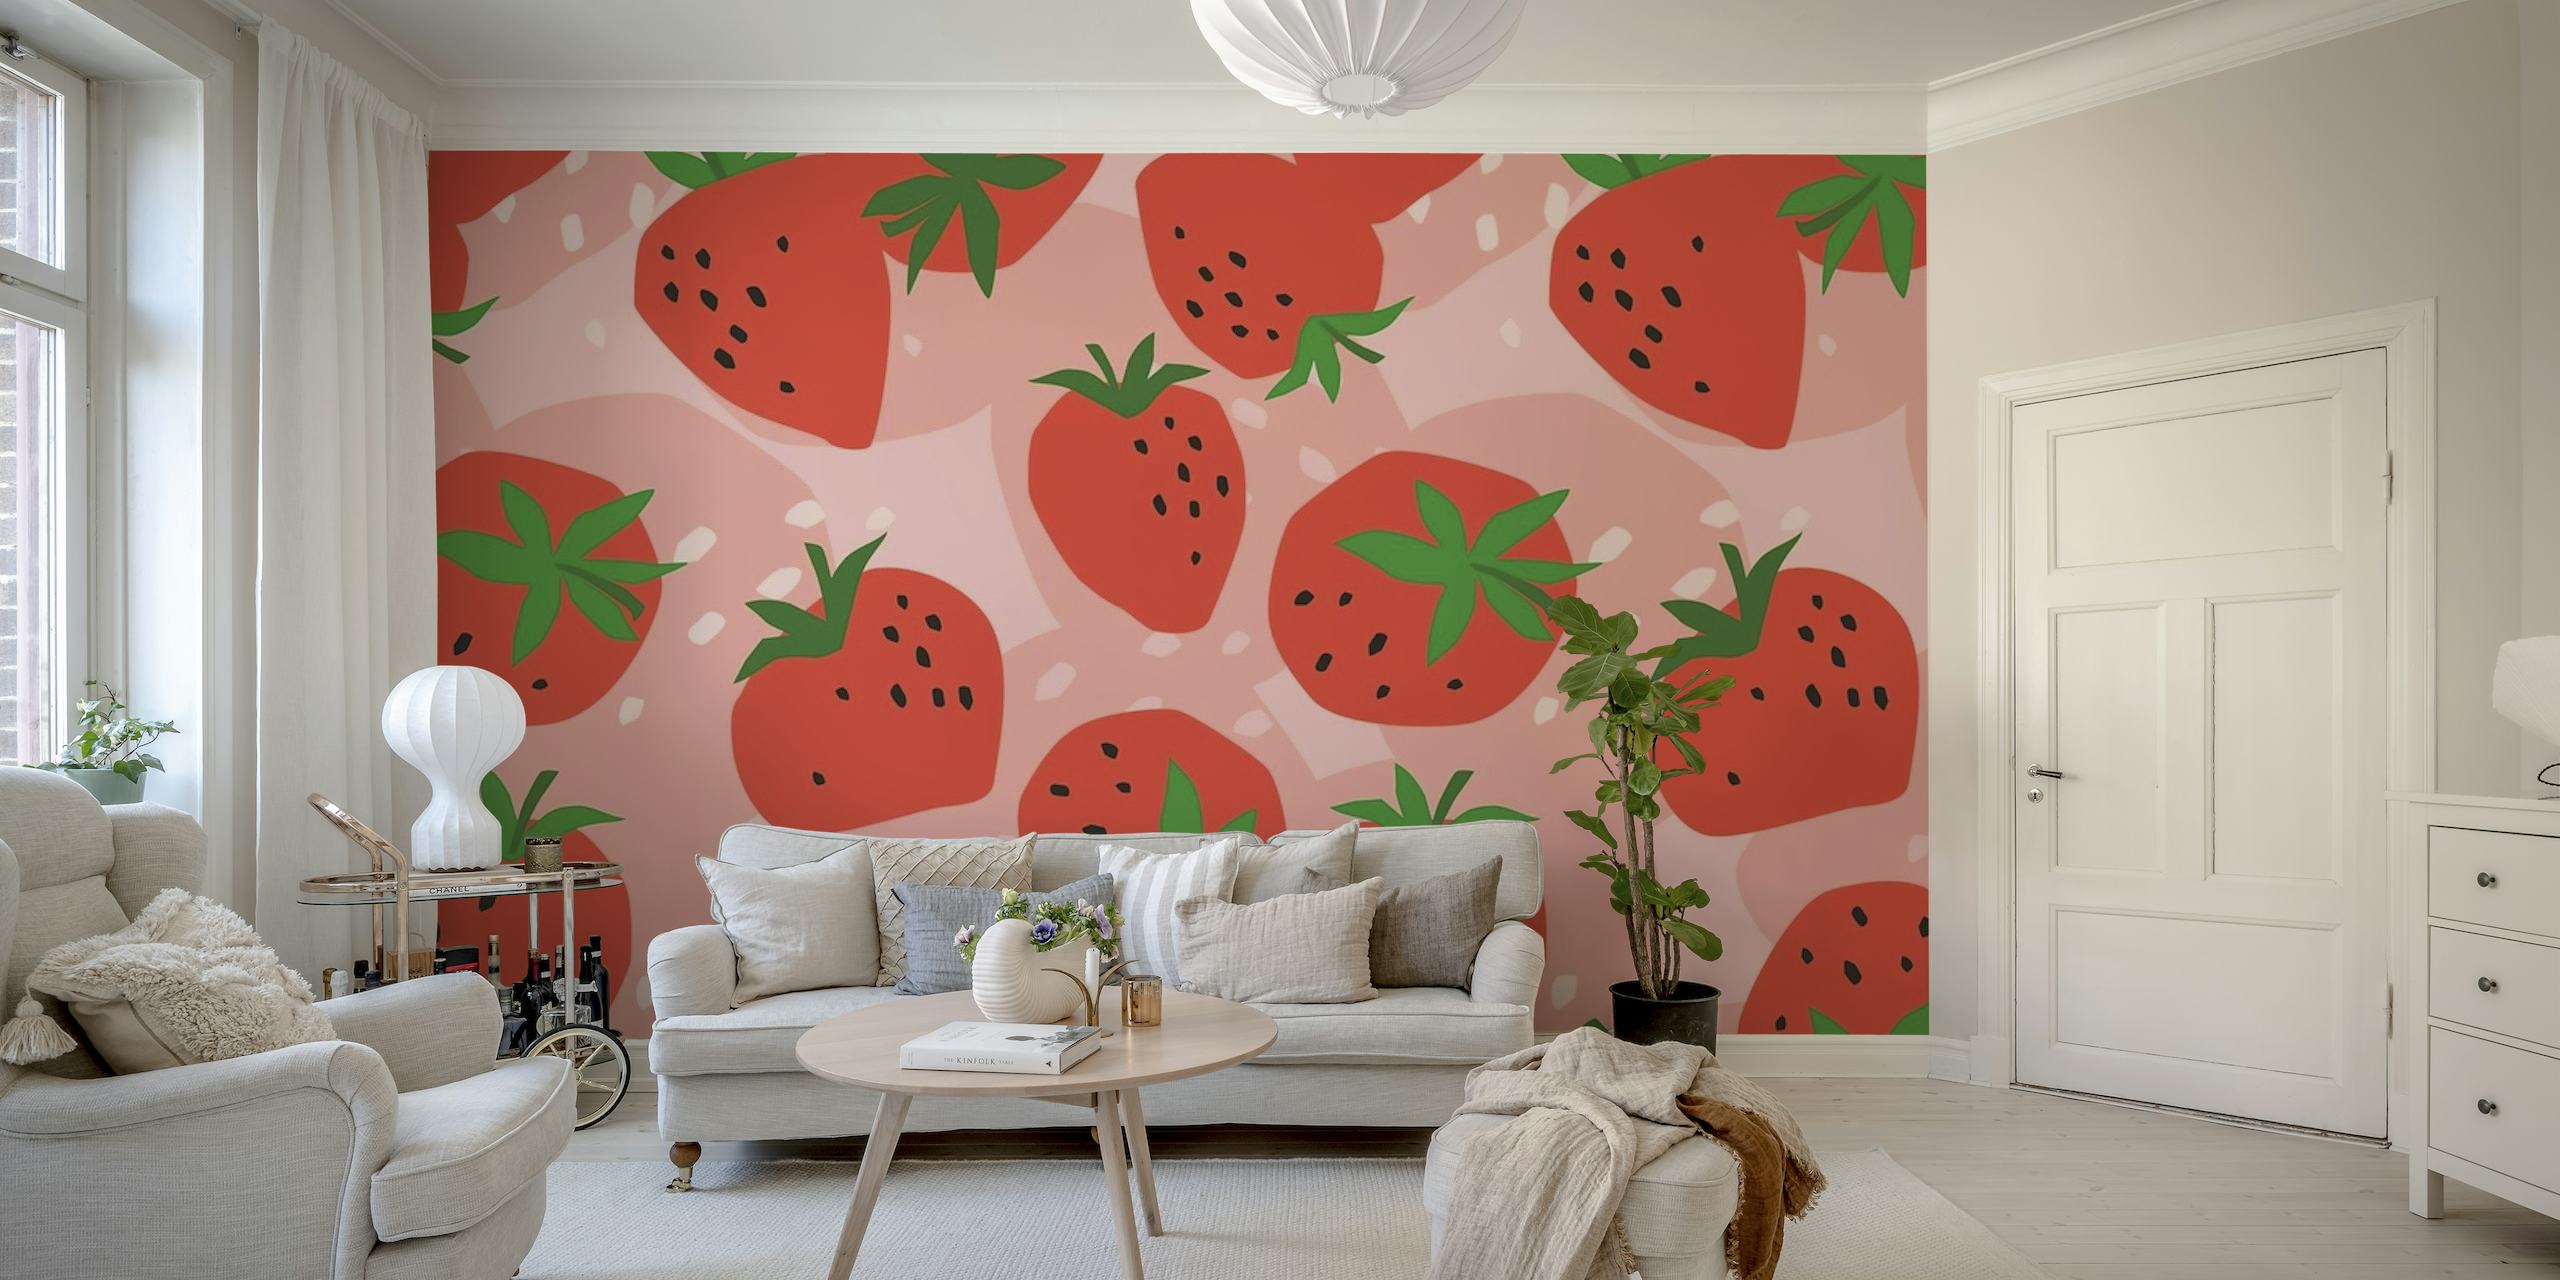 Strawberry papiers peint